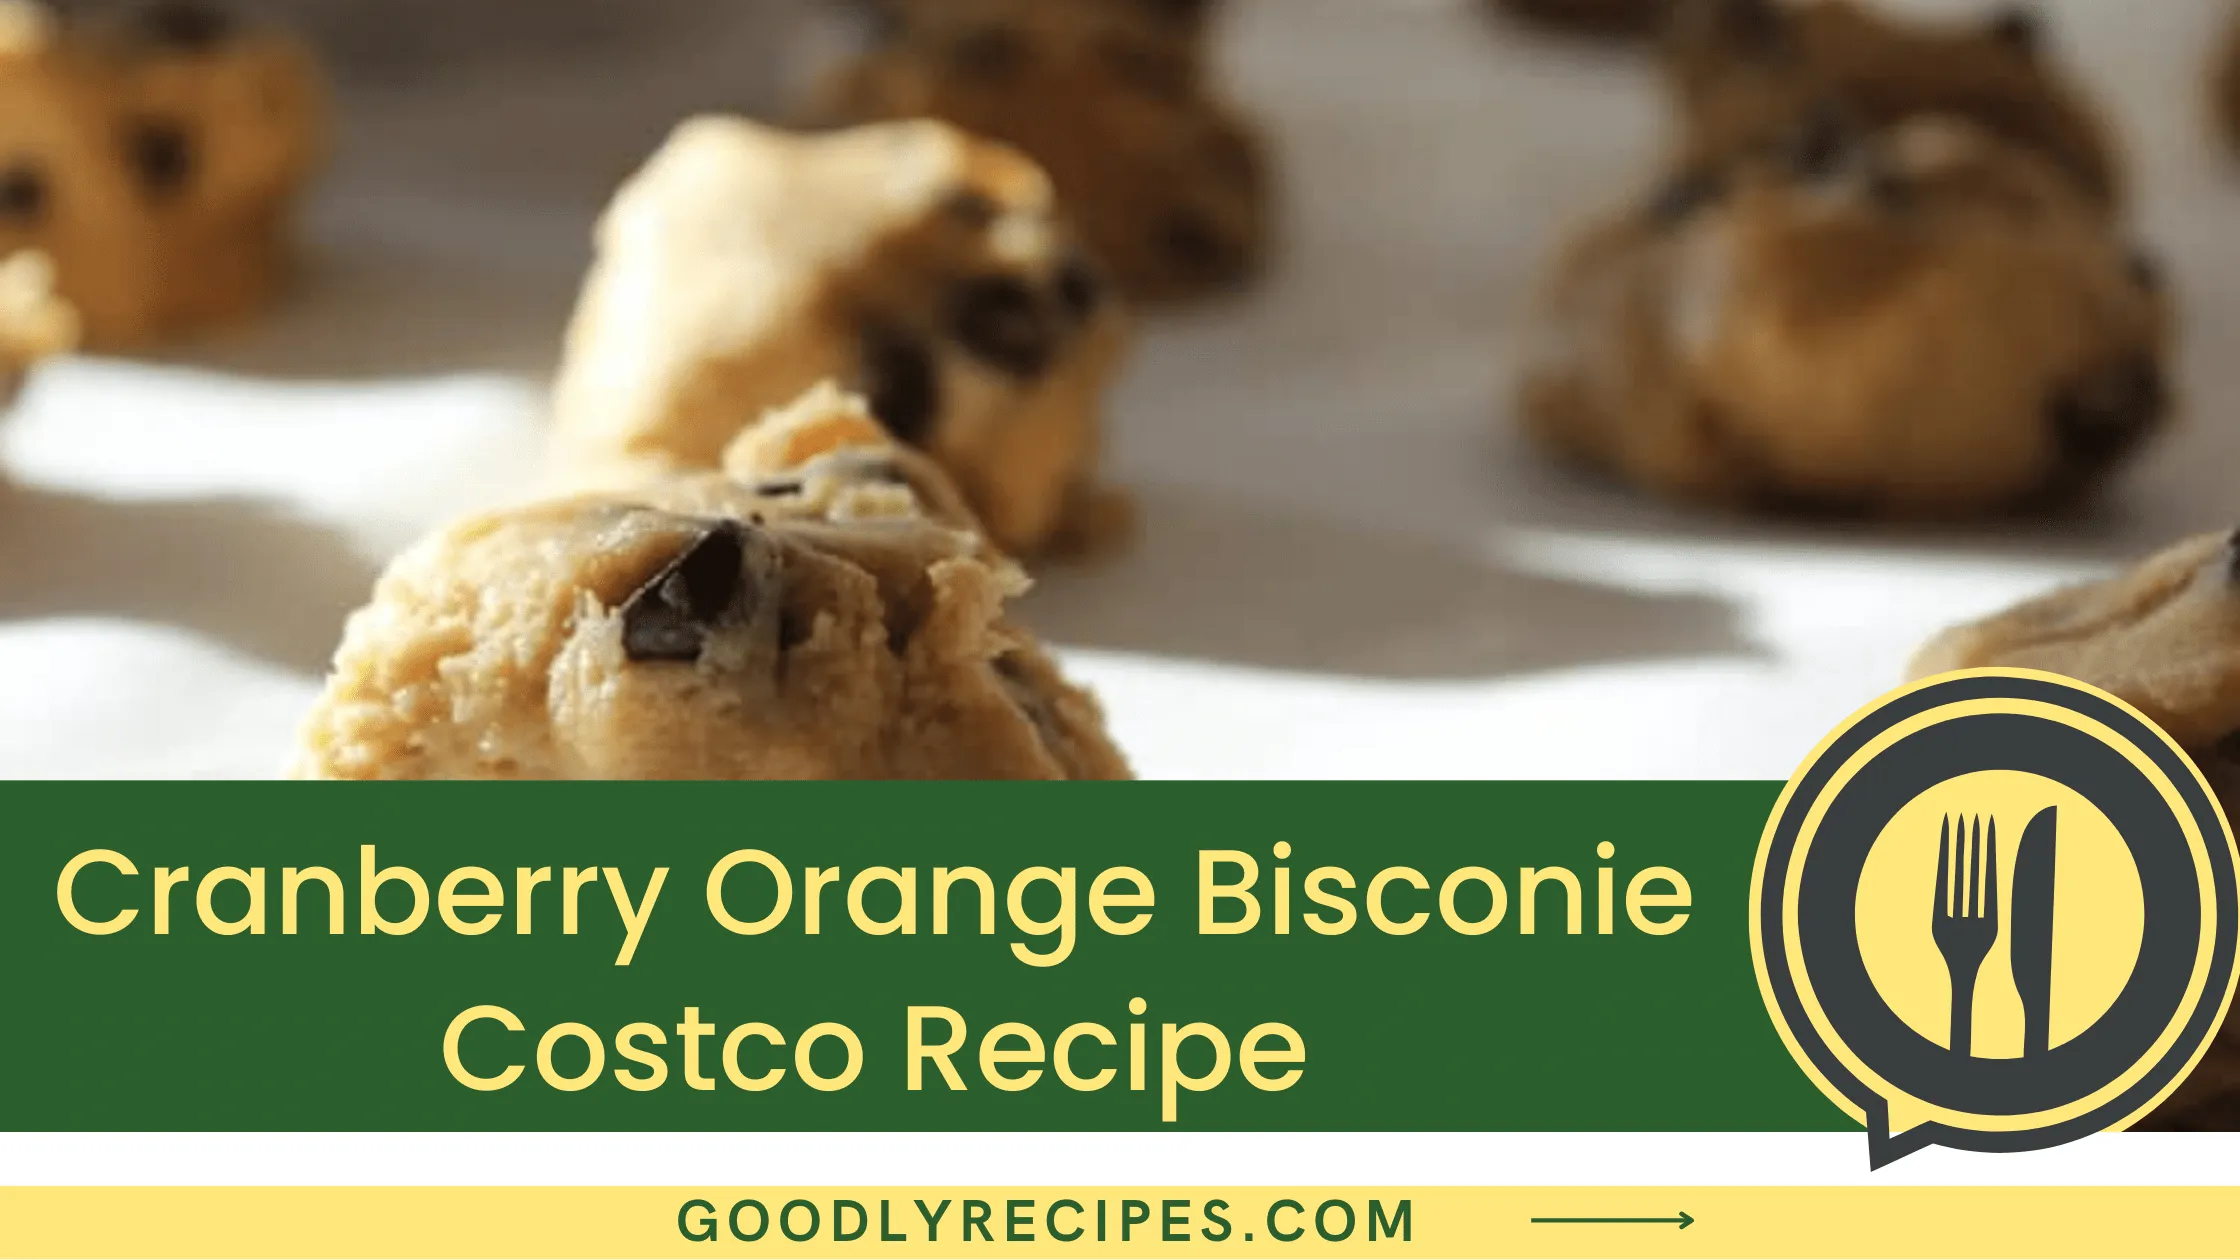 What is Cranberry Orange Bisconie Costco?